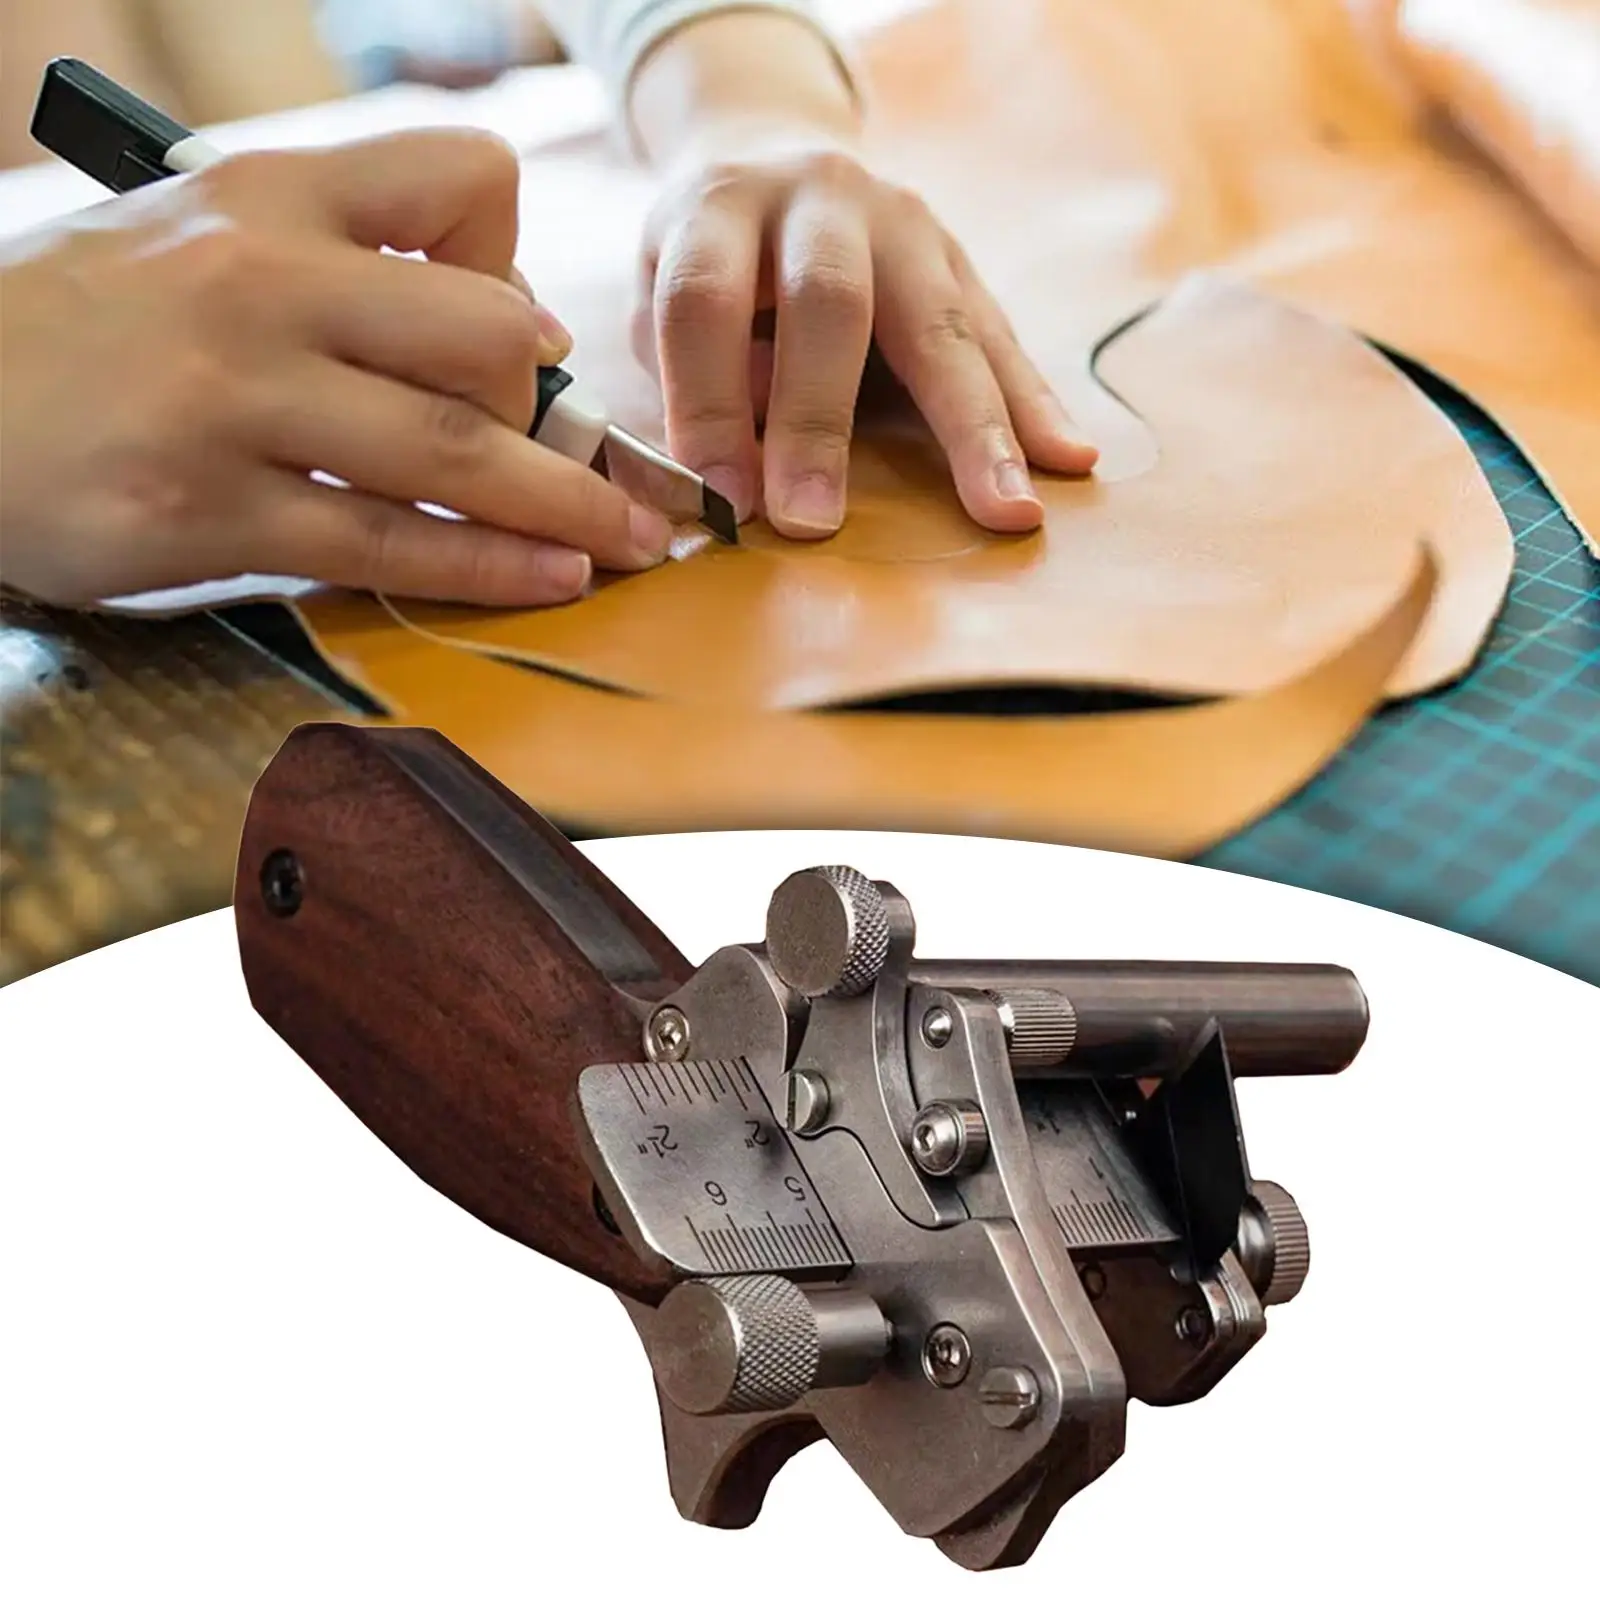 Leather Craft Tool Strap Cutter Supplies Practical Clear Scale Quick Cut Project Belt Cutter Tool Lace Cutter Strip Belt Cutter